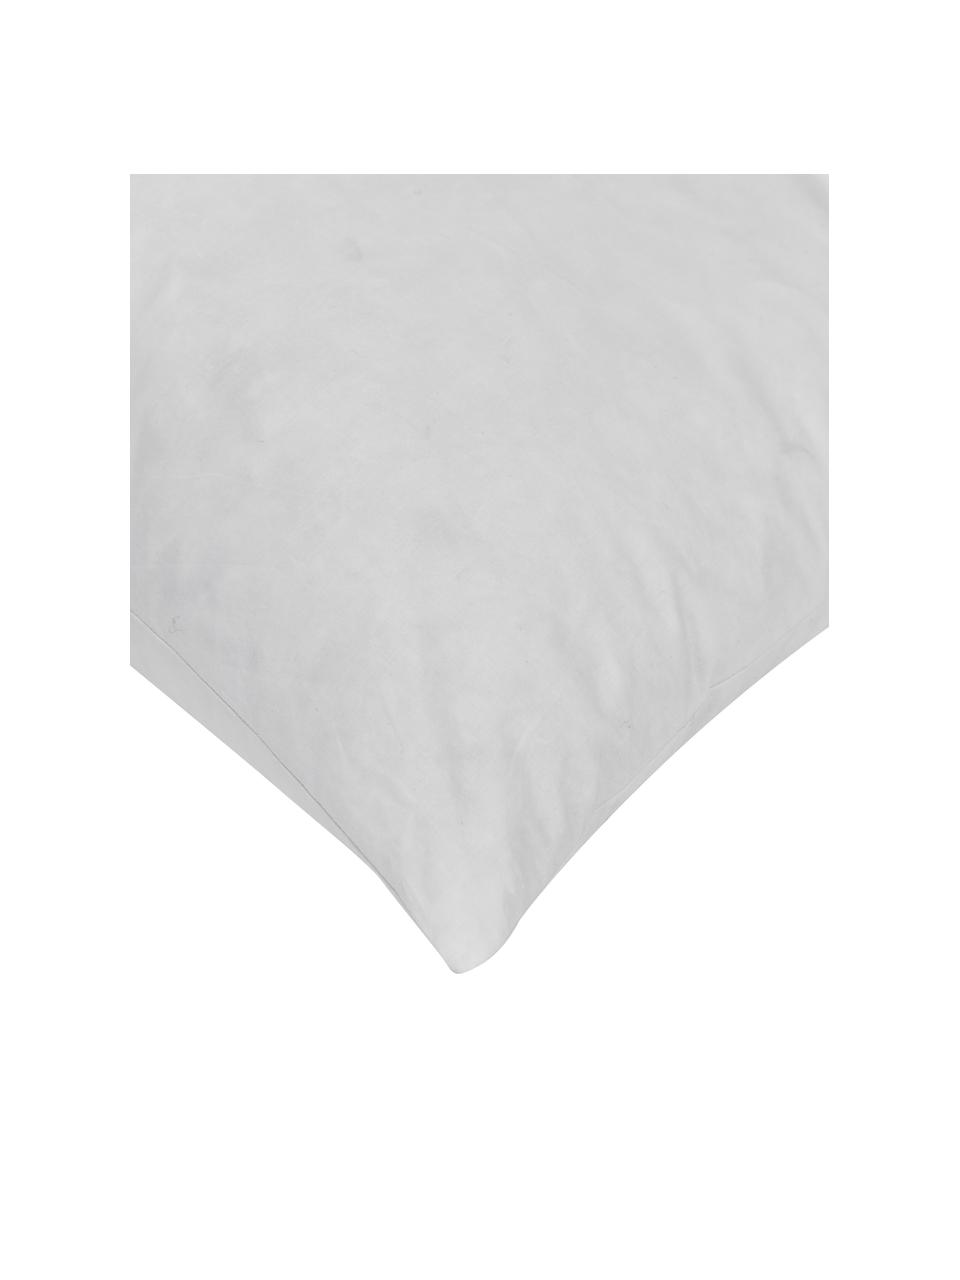 Dekokissen-Inlett Premium, Bezug: Feinköper, 100 % Baumwoll, Weiß, B 60 x L 60 cm